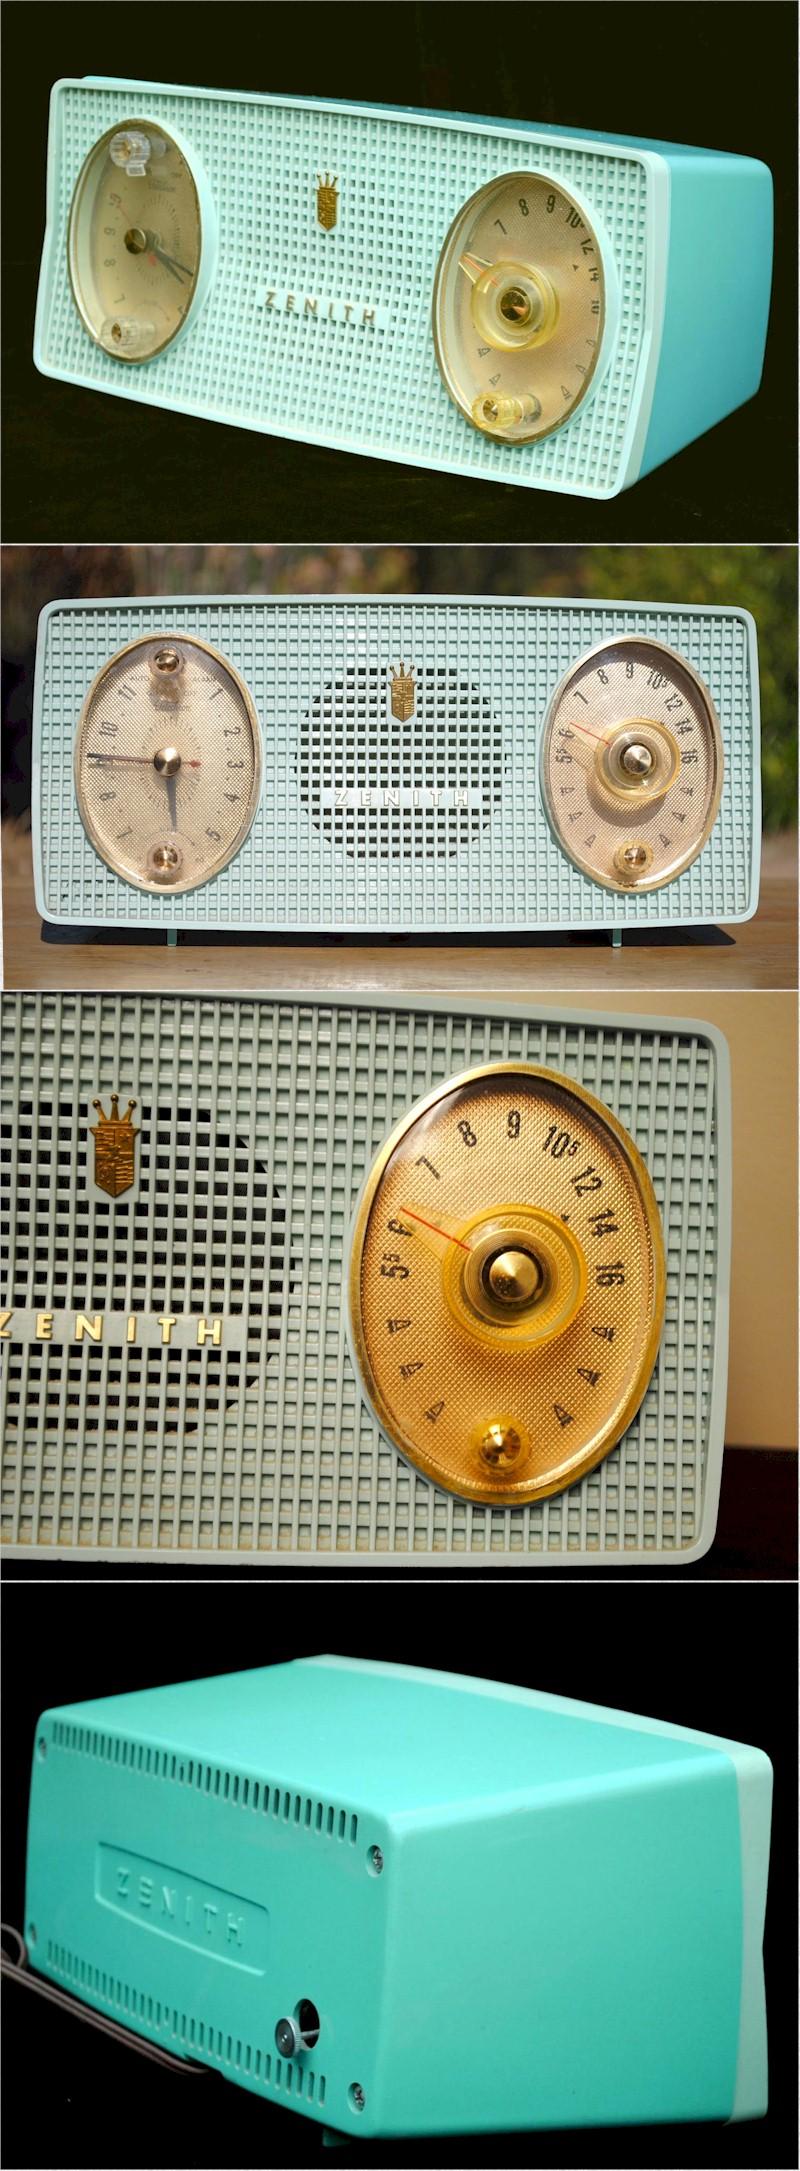 Zenith Clock Radio